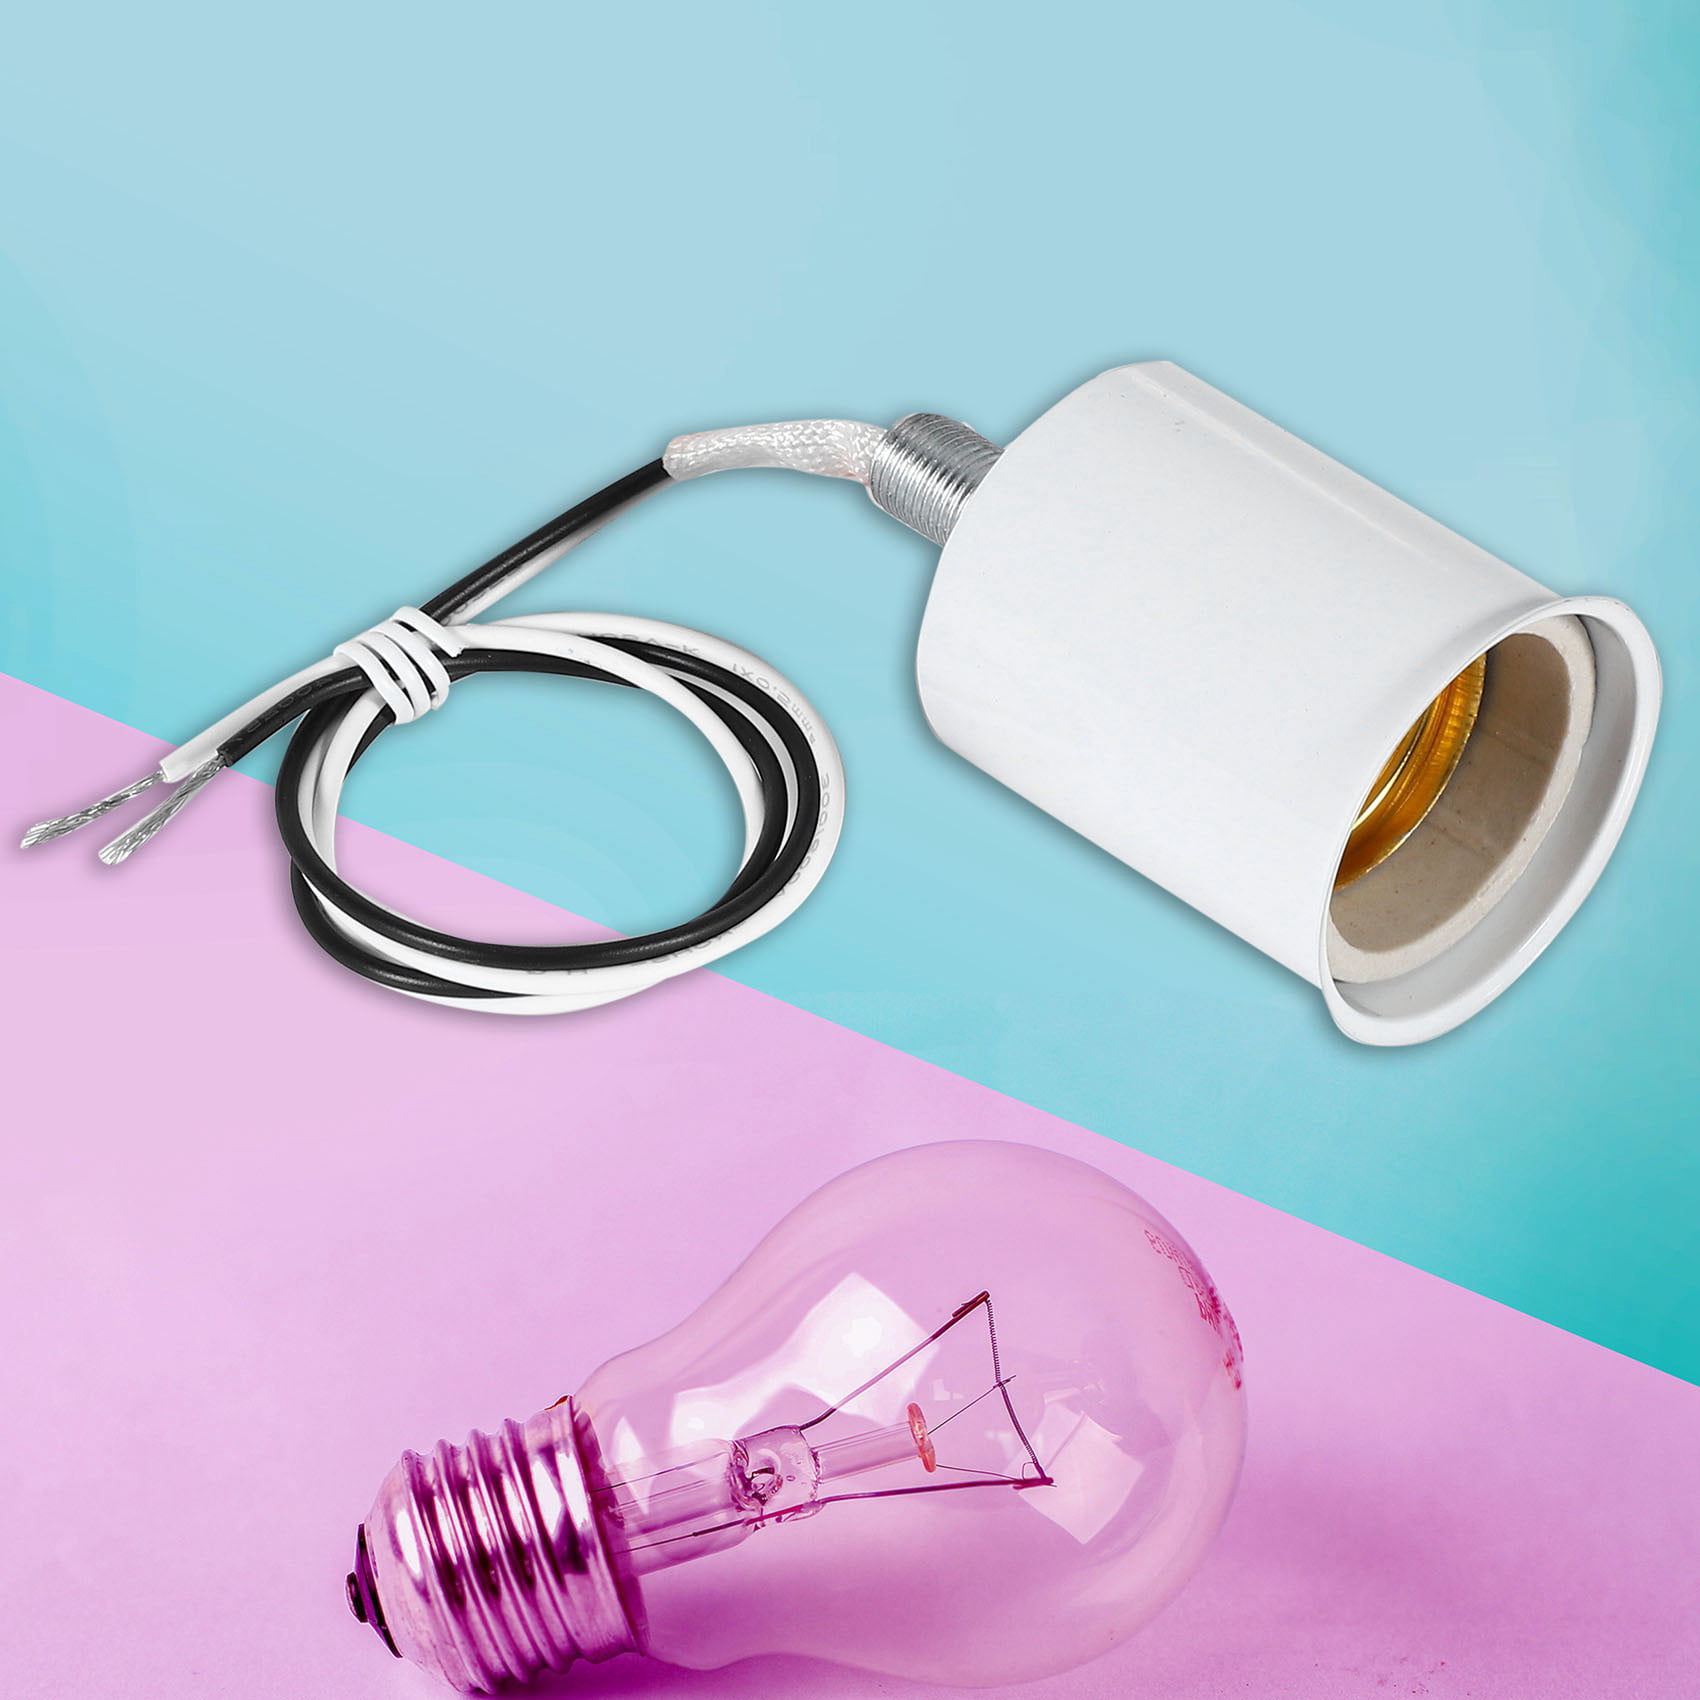 1pc E27 Ceramic Screw Base Round LED Light Bulb Lamp Socket Holder Adapter Vents 